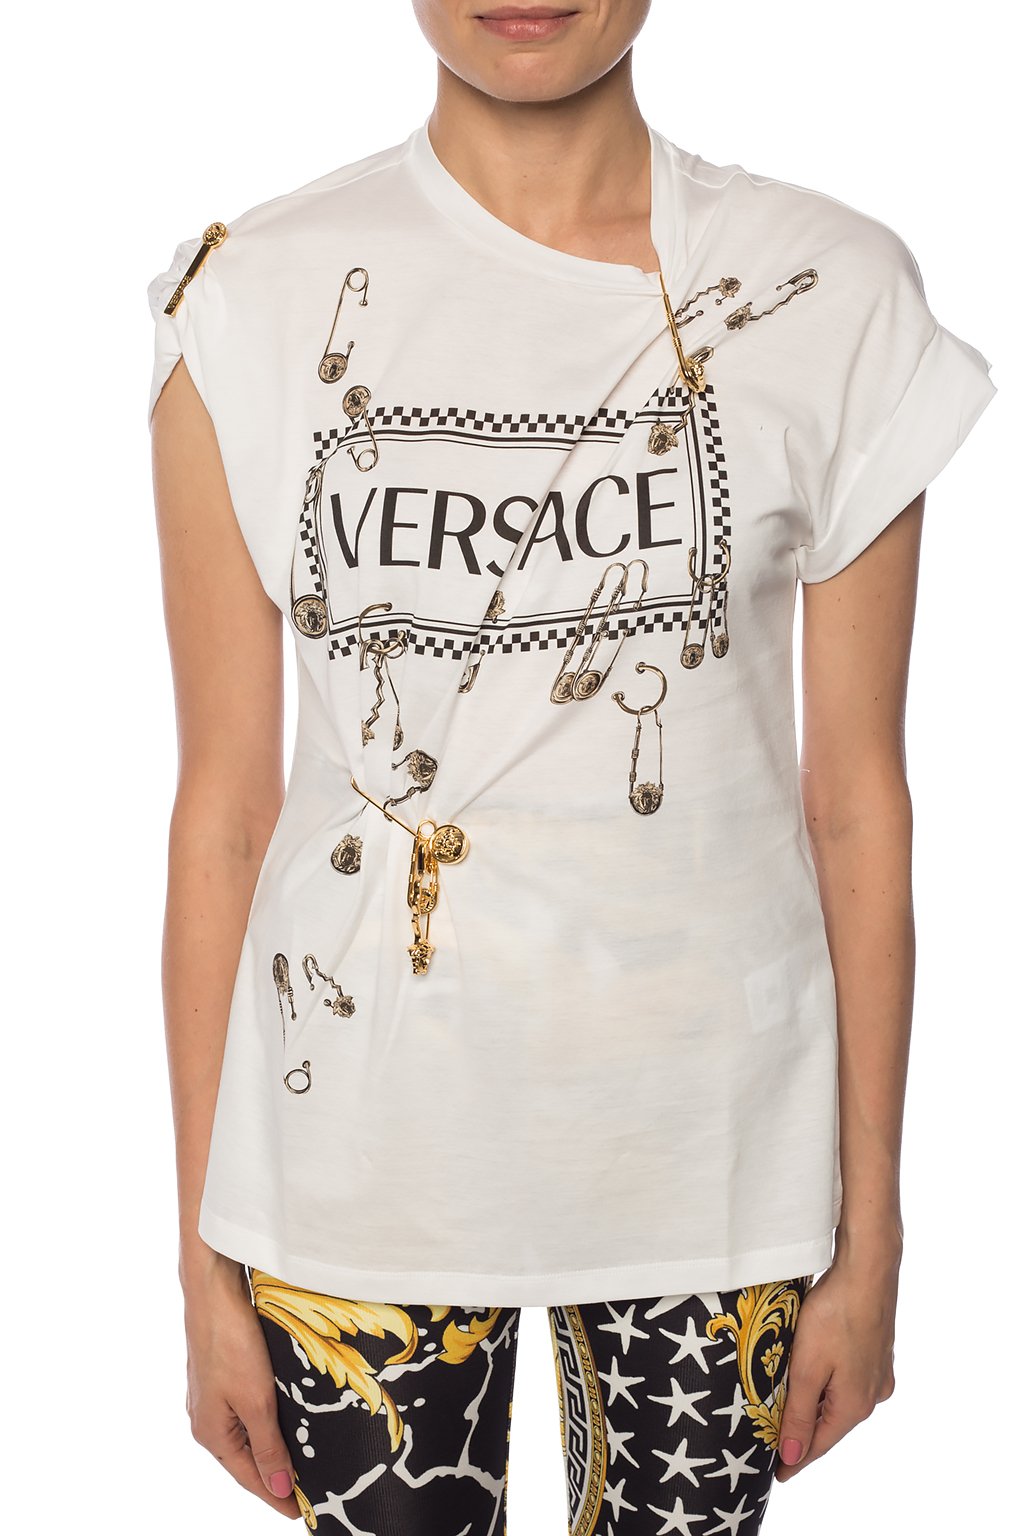 versace safety pin t shirt